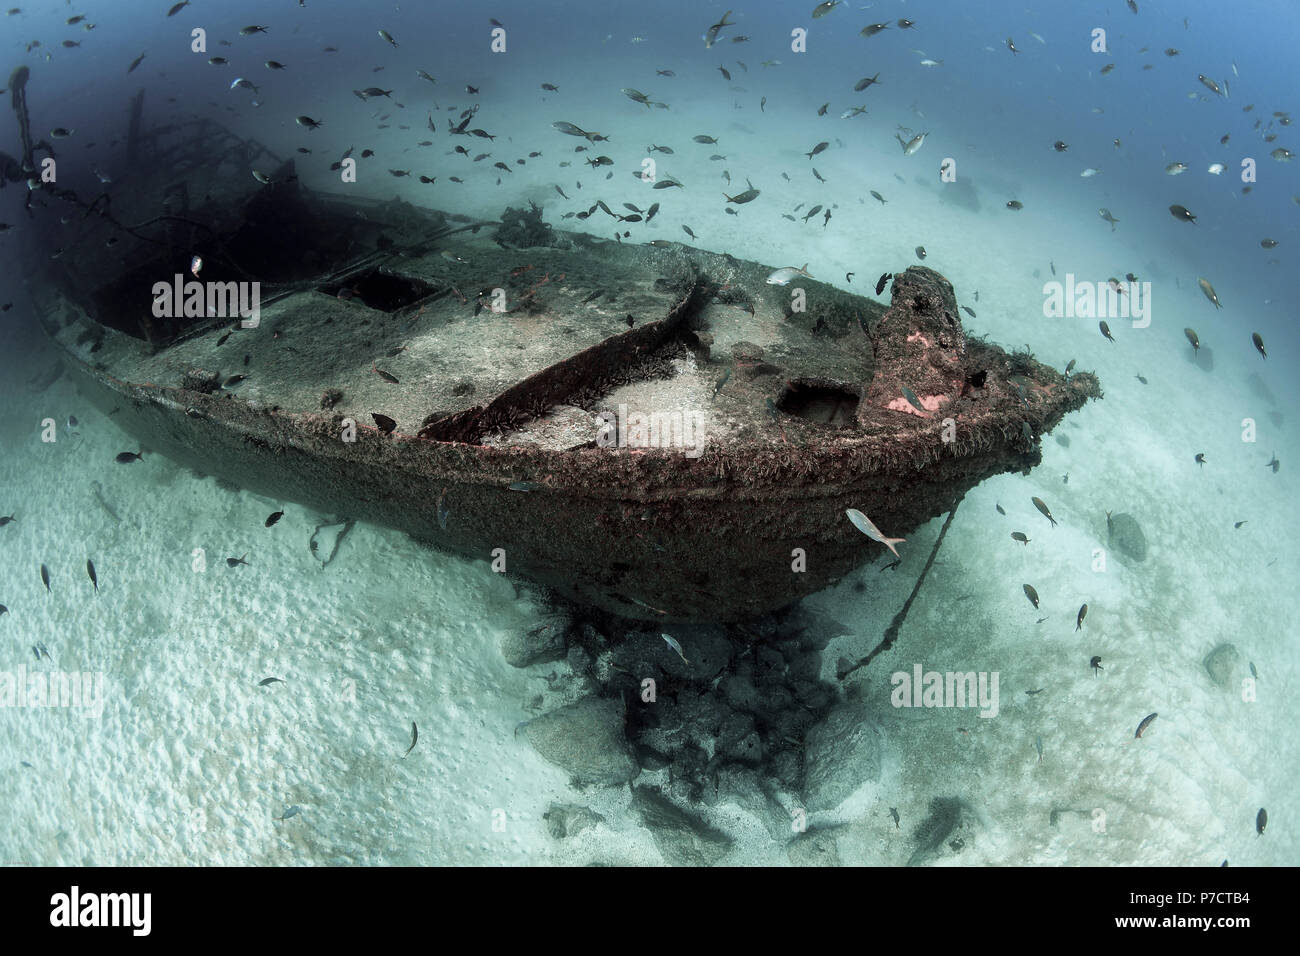 shipwrecks on ocean floor